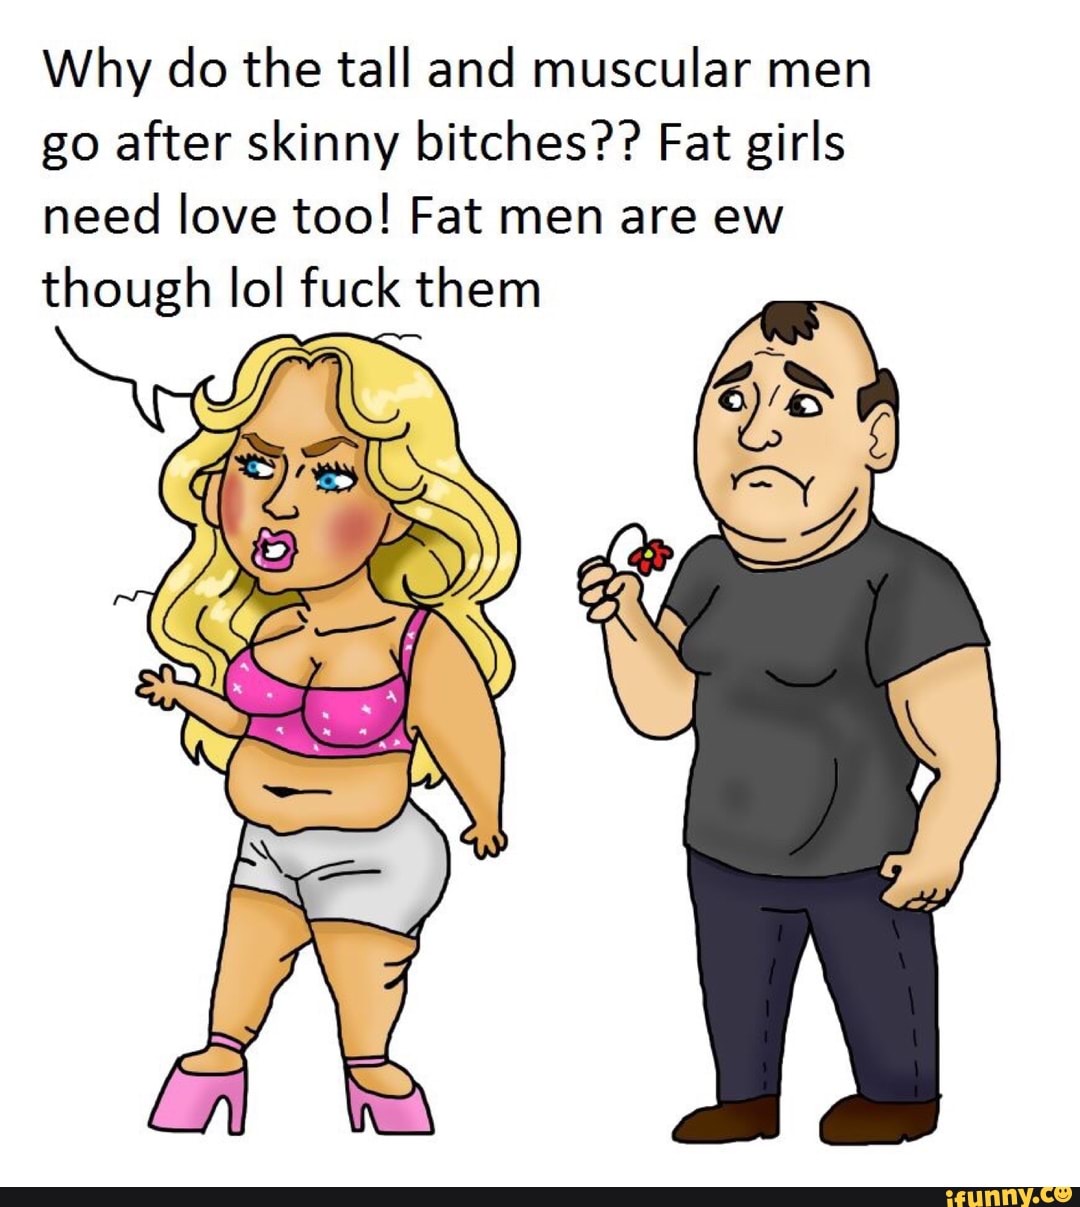 Fat girls need love too! 